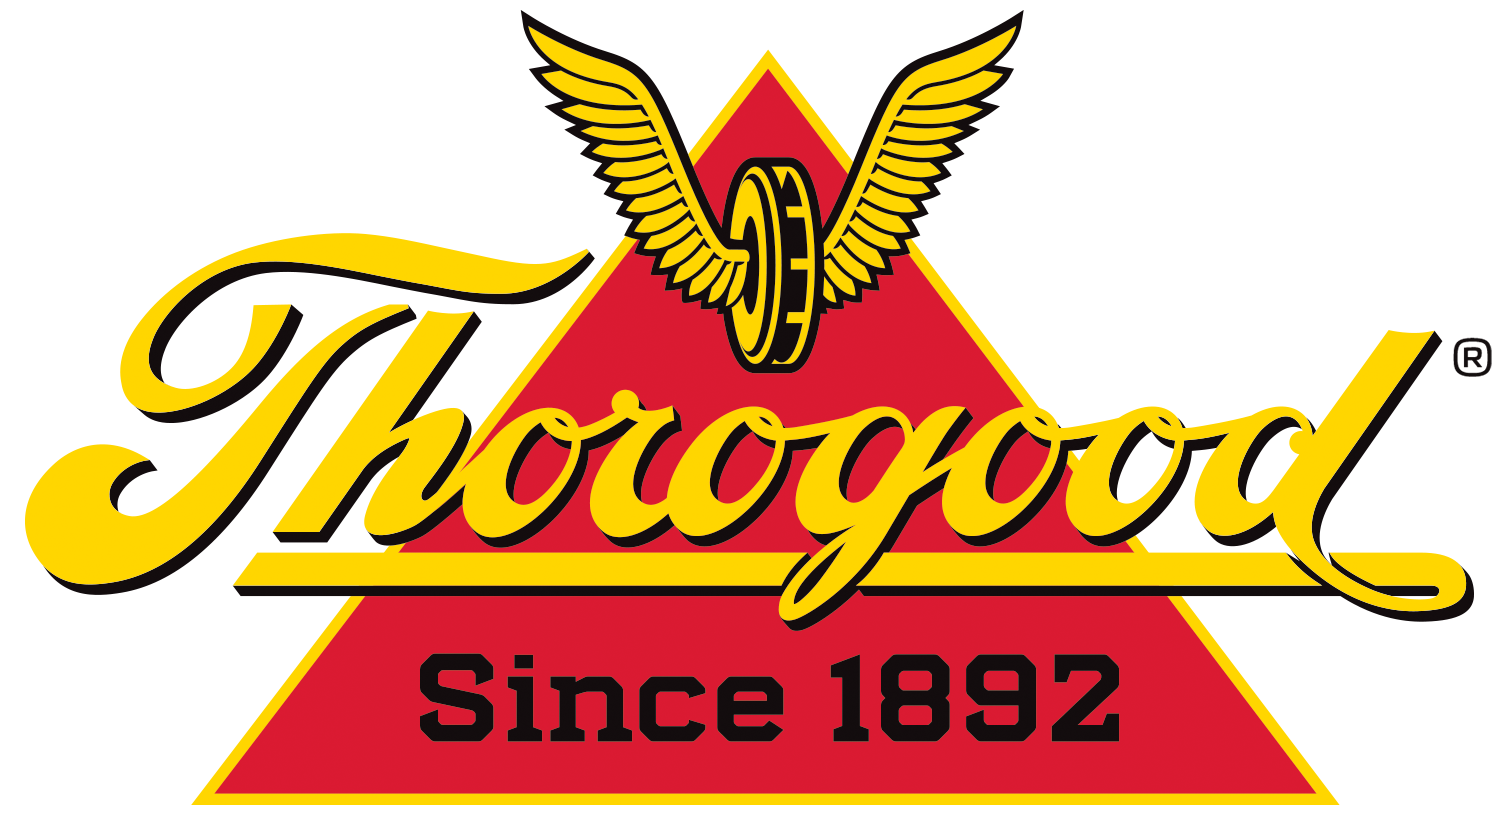 
Thorogood
